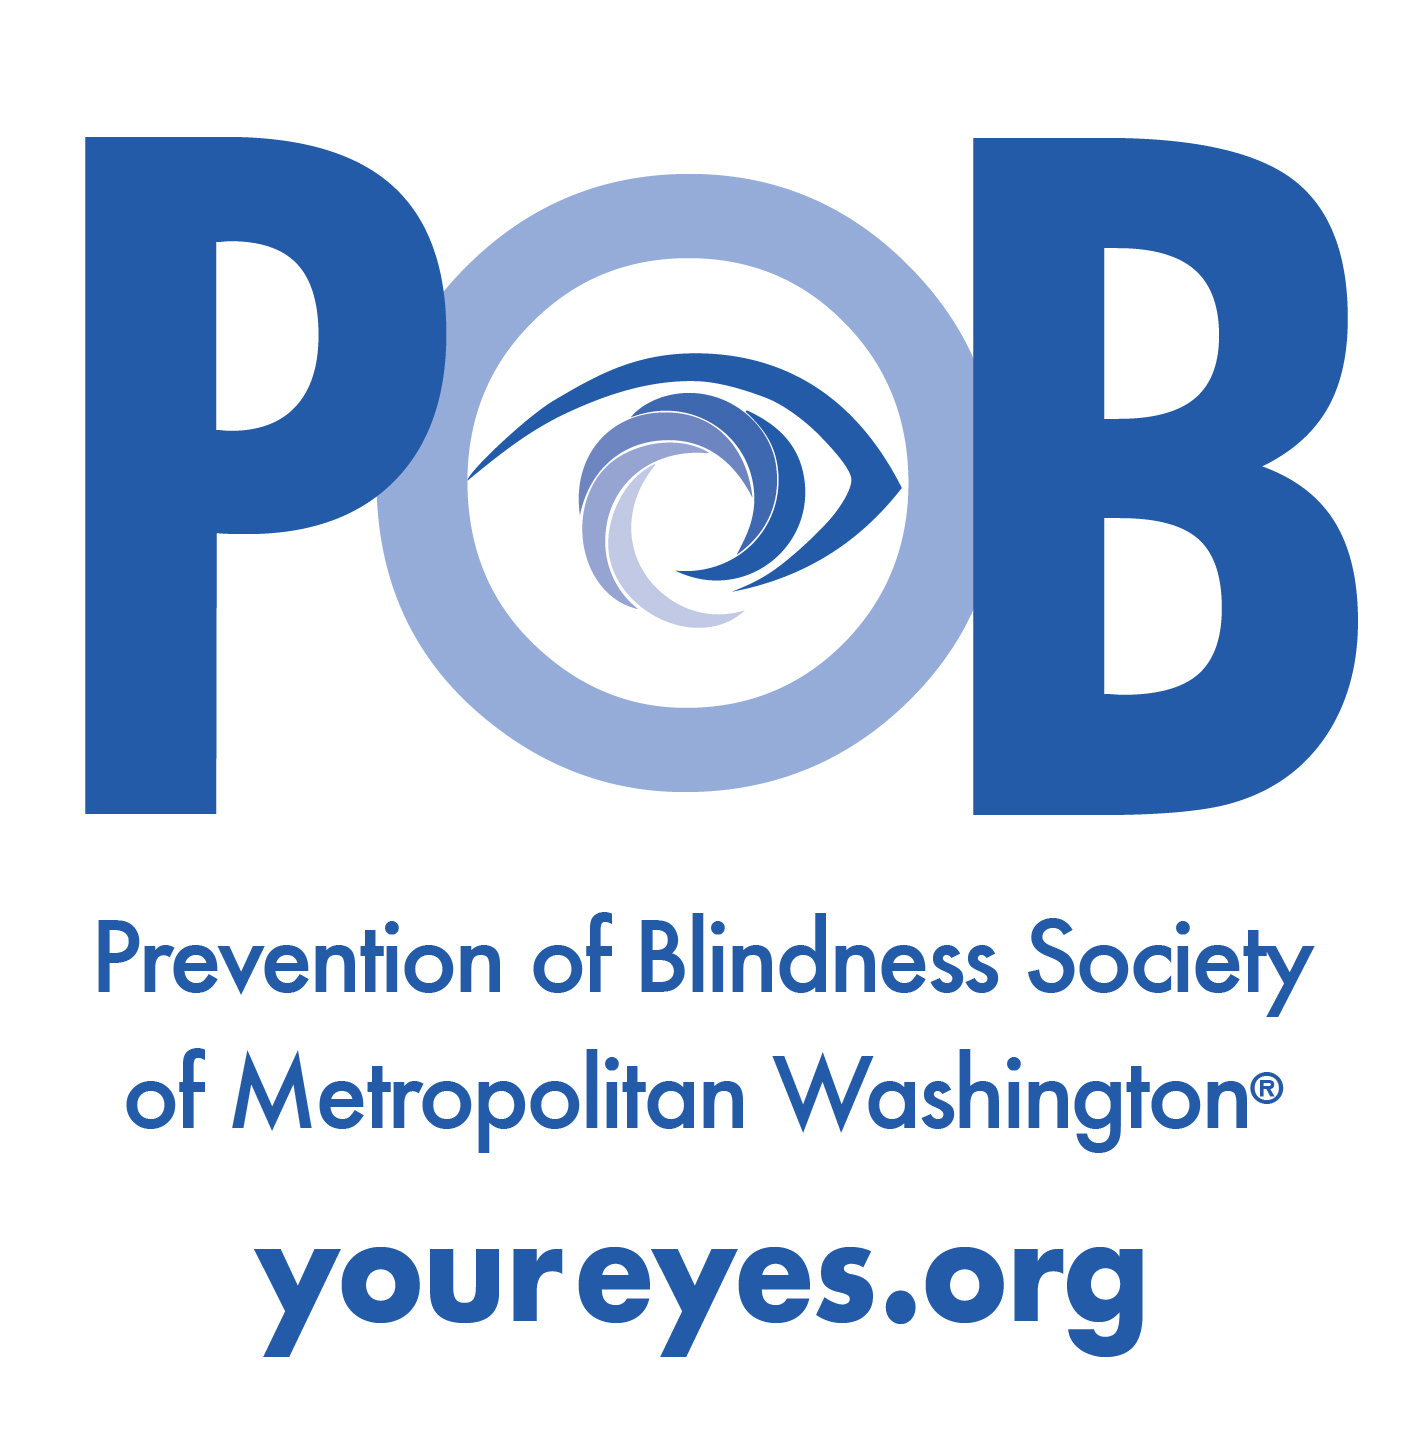 Prevention of Blindness Society of Metropolitan Washington